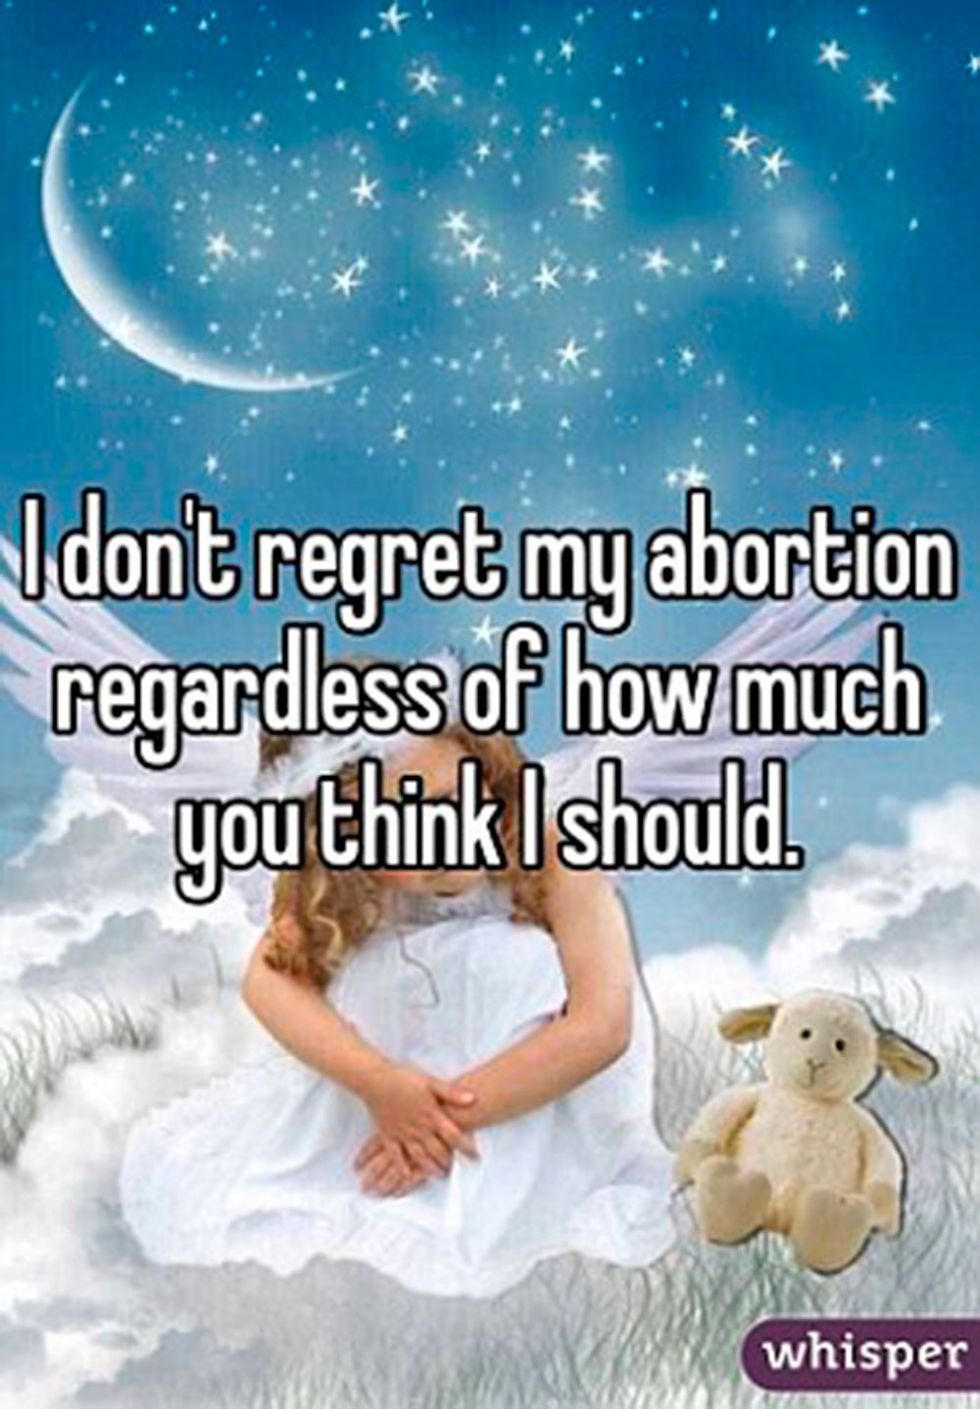 Whisper abortion confession